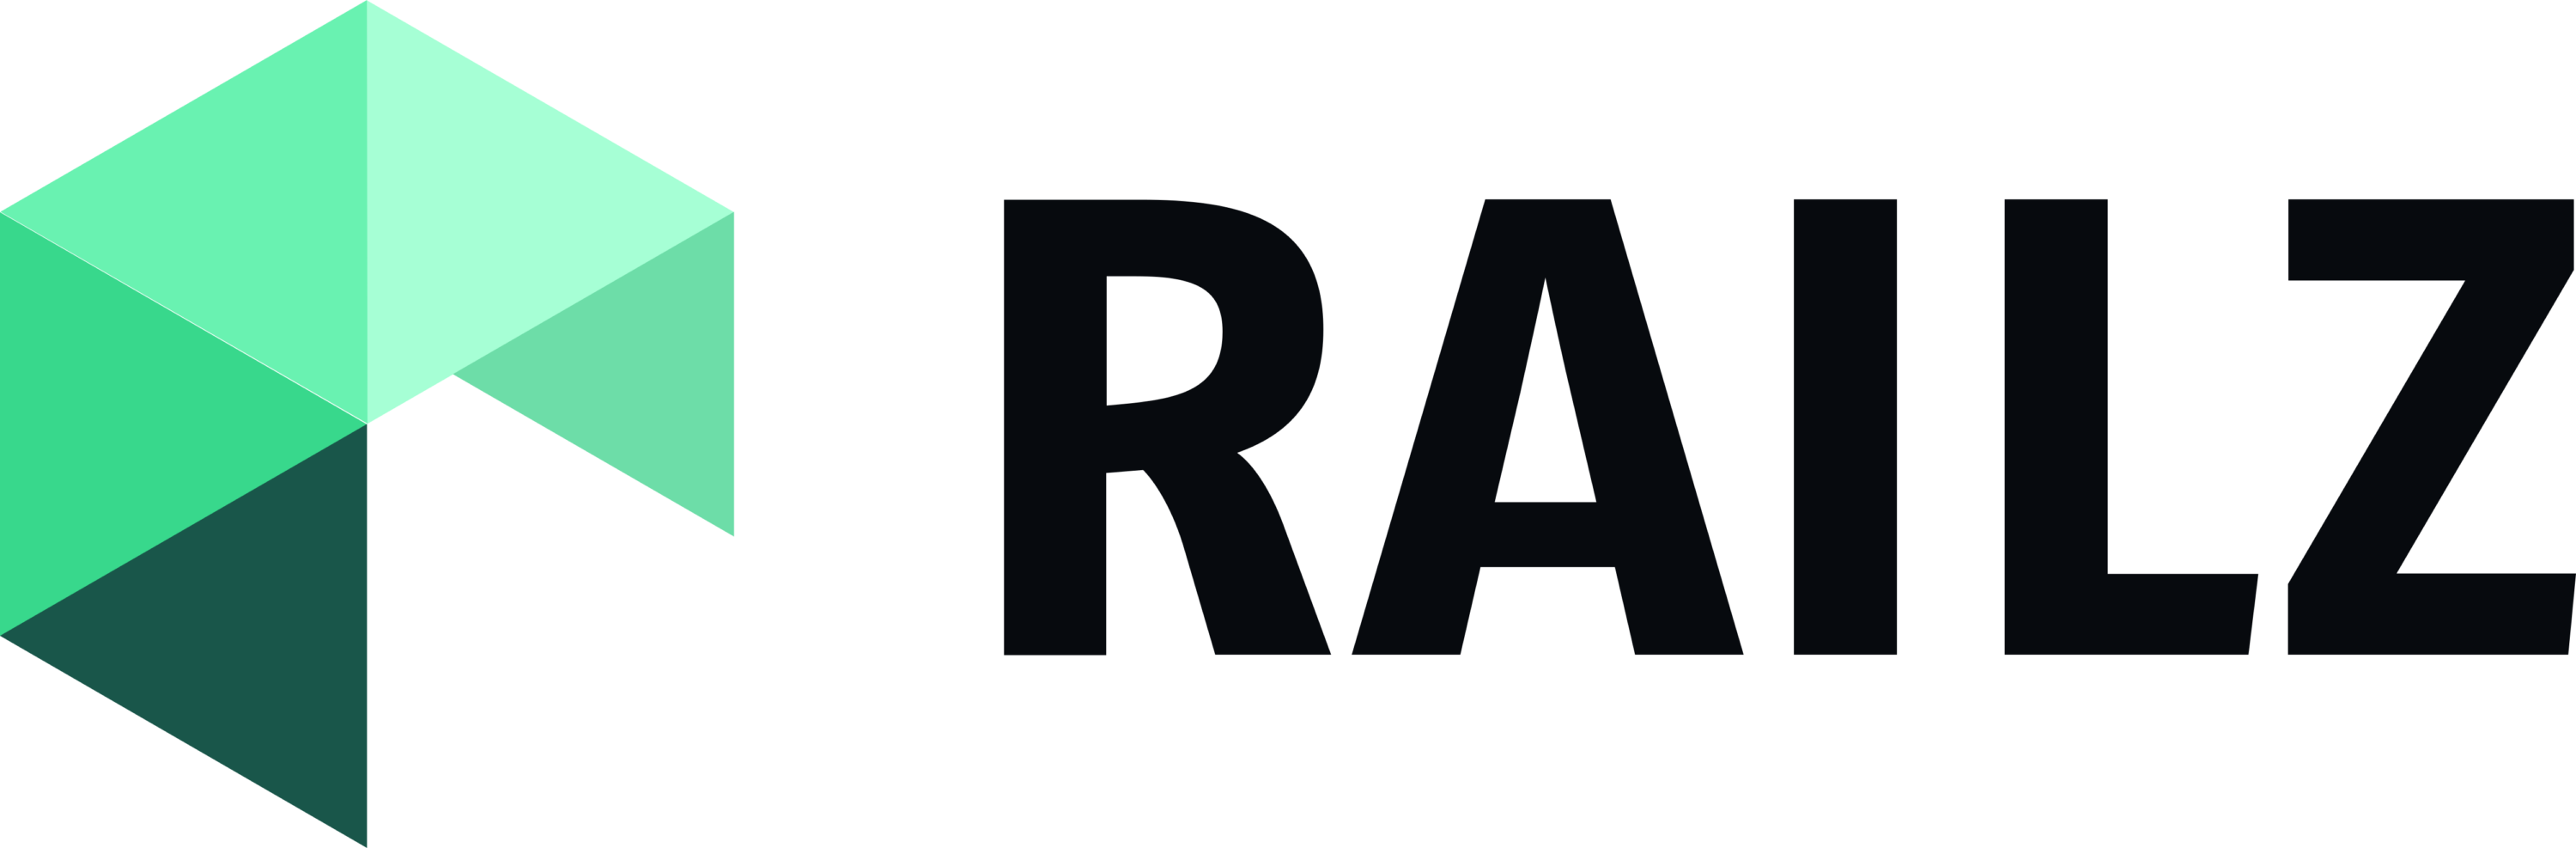 Railz Logo